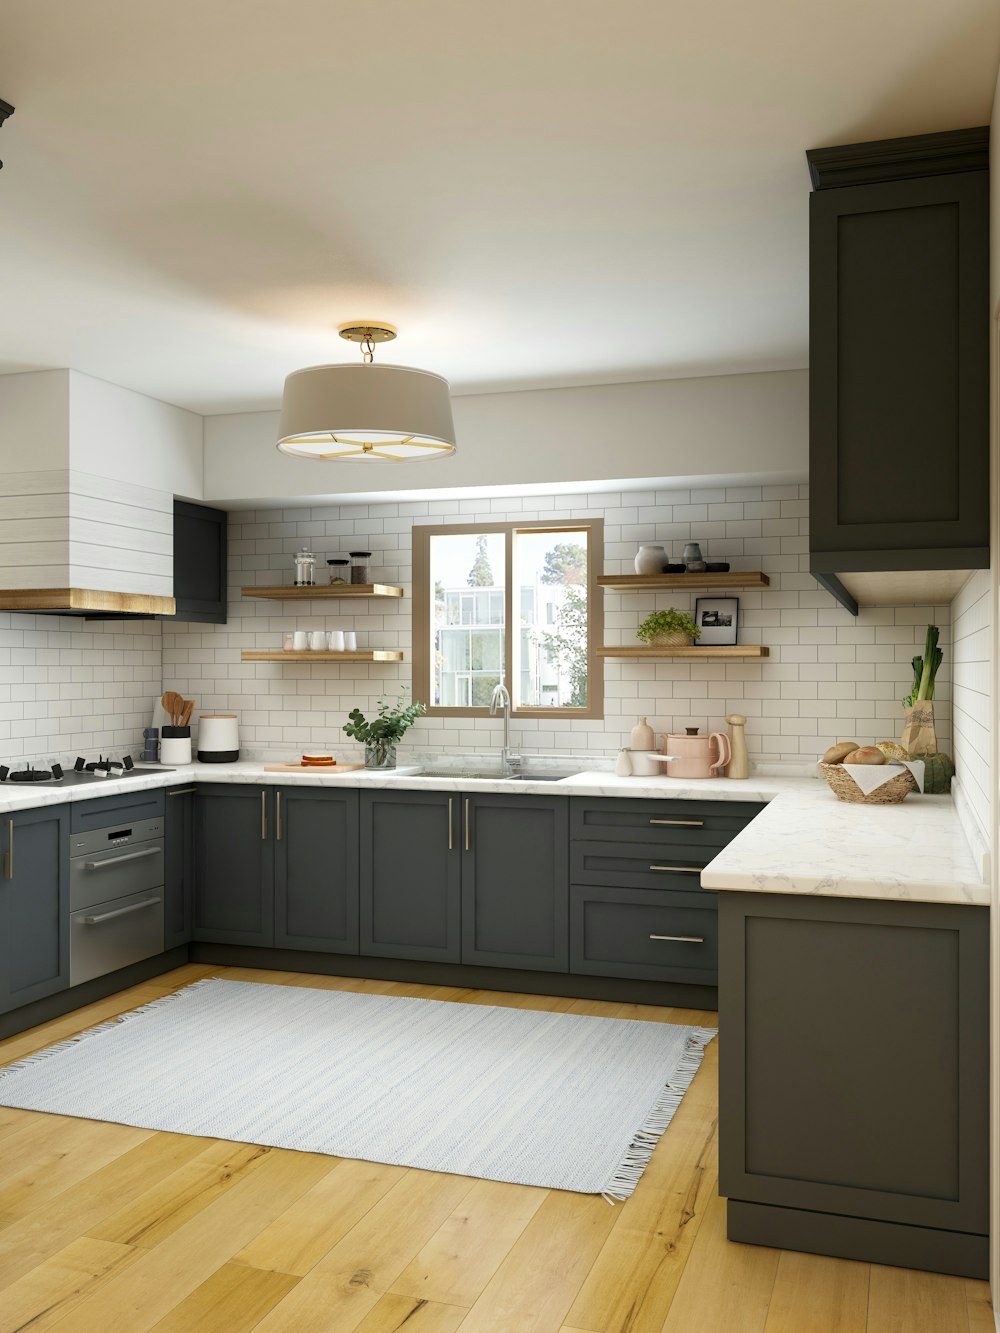 20+ Kitchen Design Pictures   Download Free Images on Unsplash